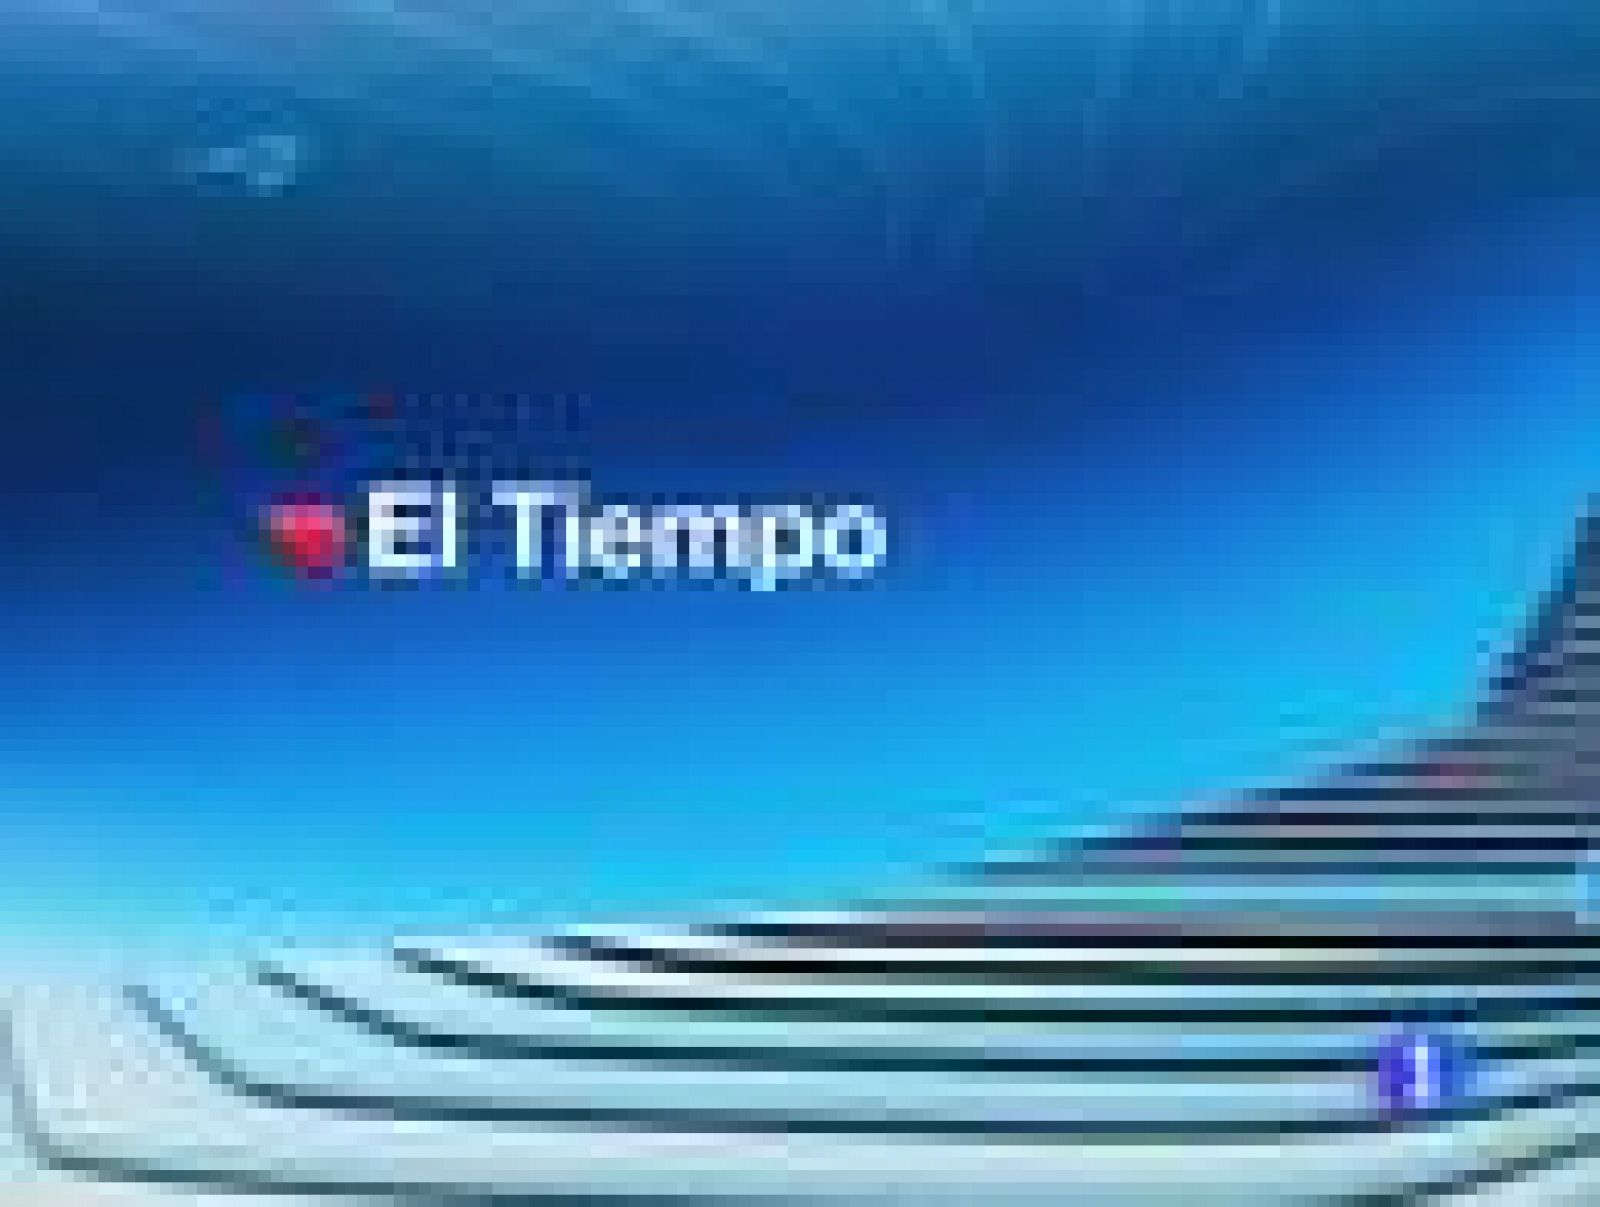 Informativo Telerioja: El tiempo en La Rioja - 03/07/13 | RTVE Play